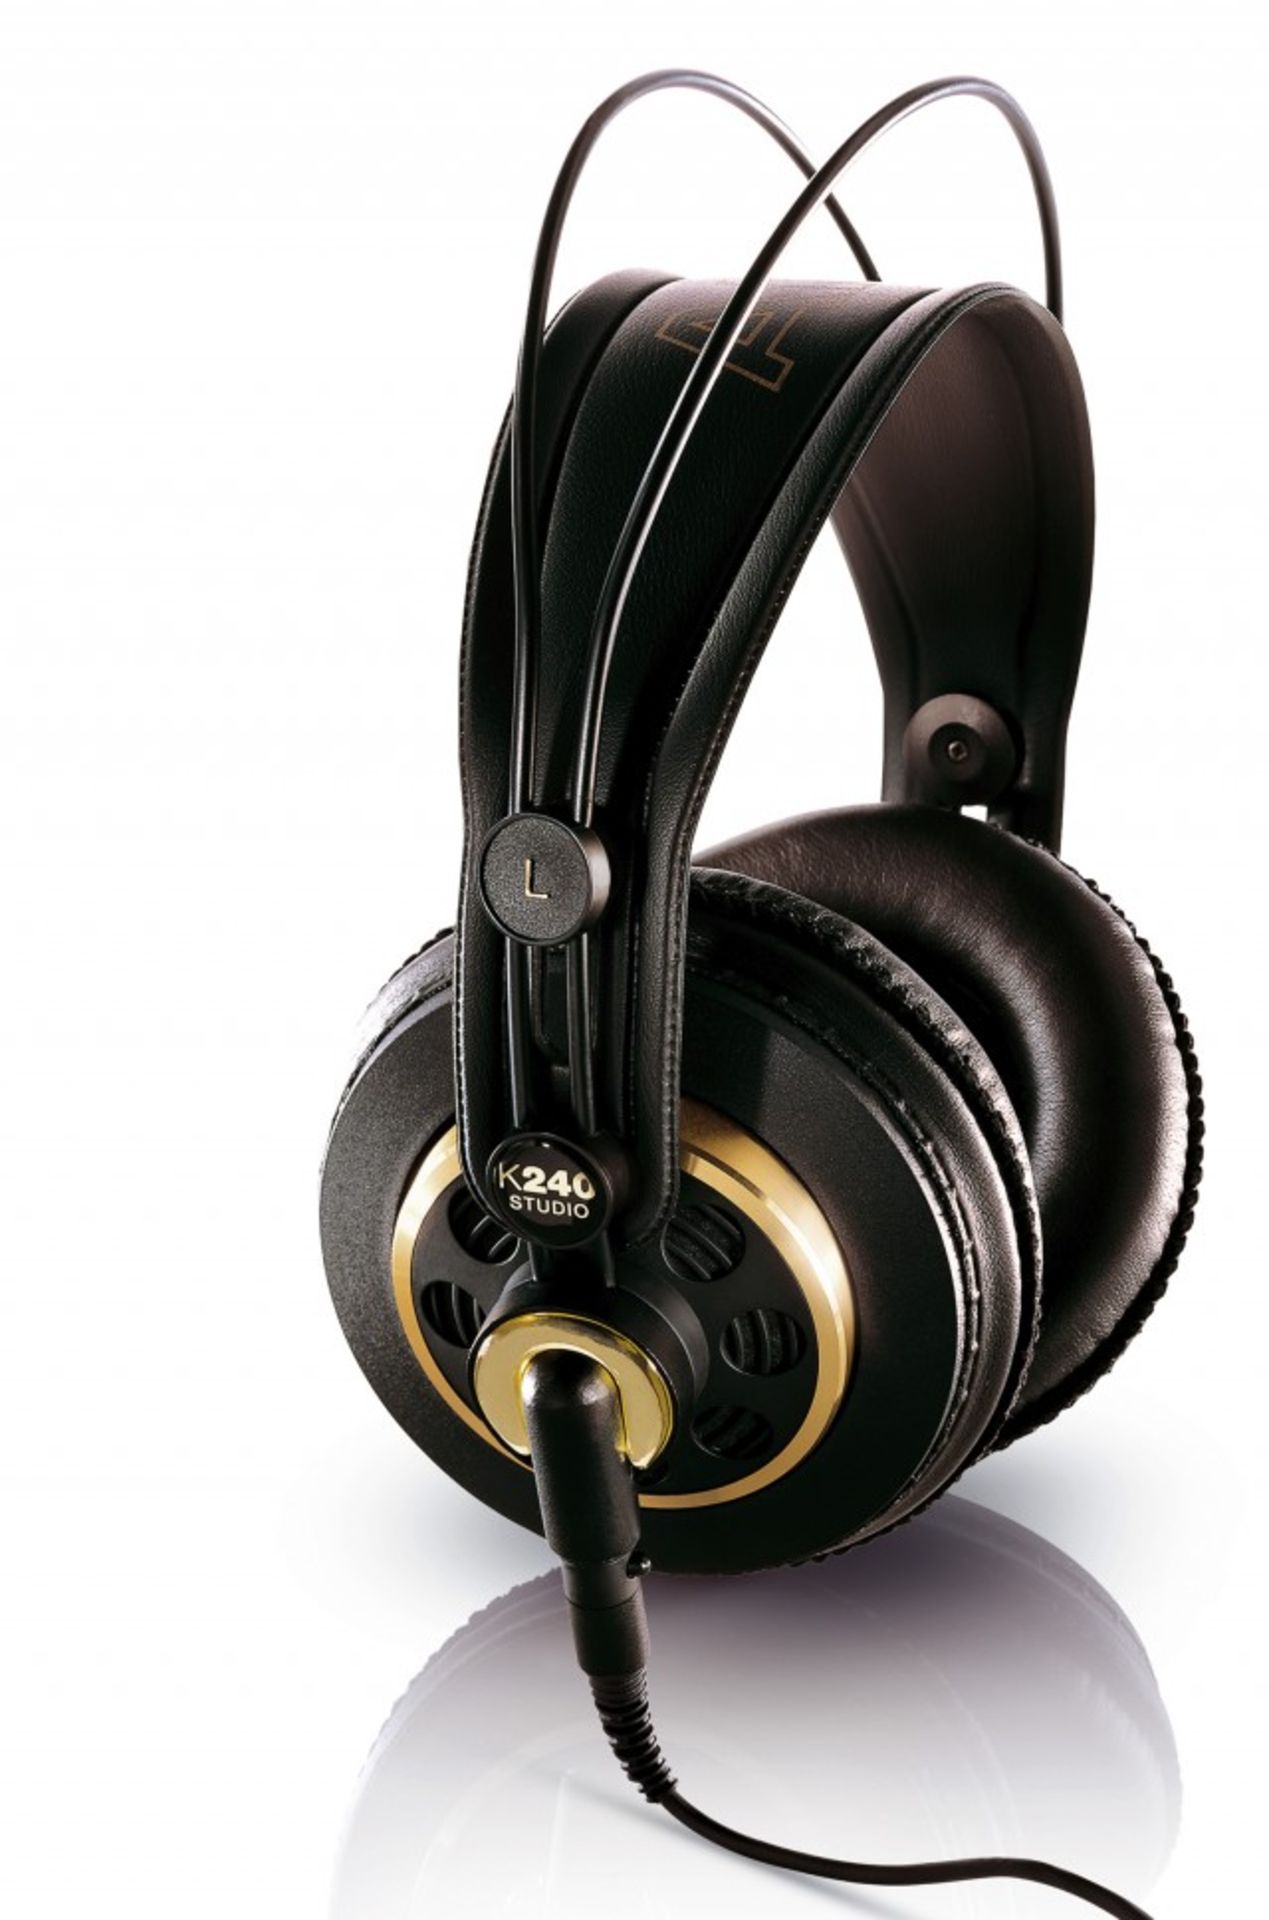 BRAND NEW AKG K 240 Semi-Open Studio Headphones - RRP £89.99 Each - t has 55 ohms impedance, plug-in